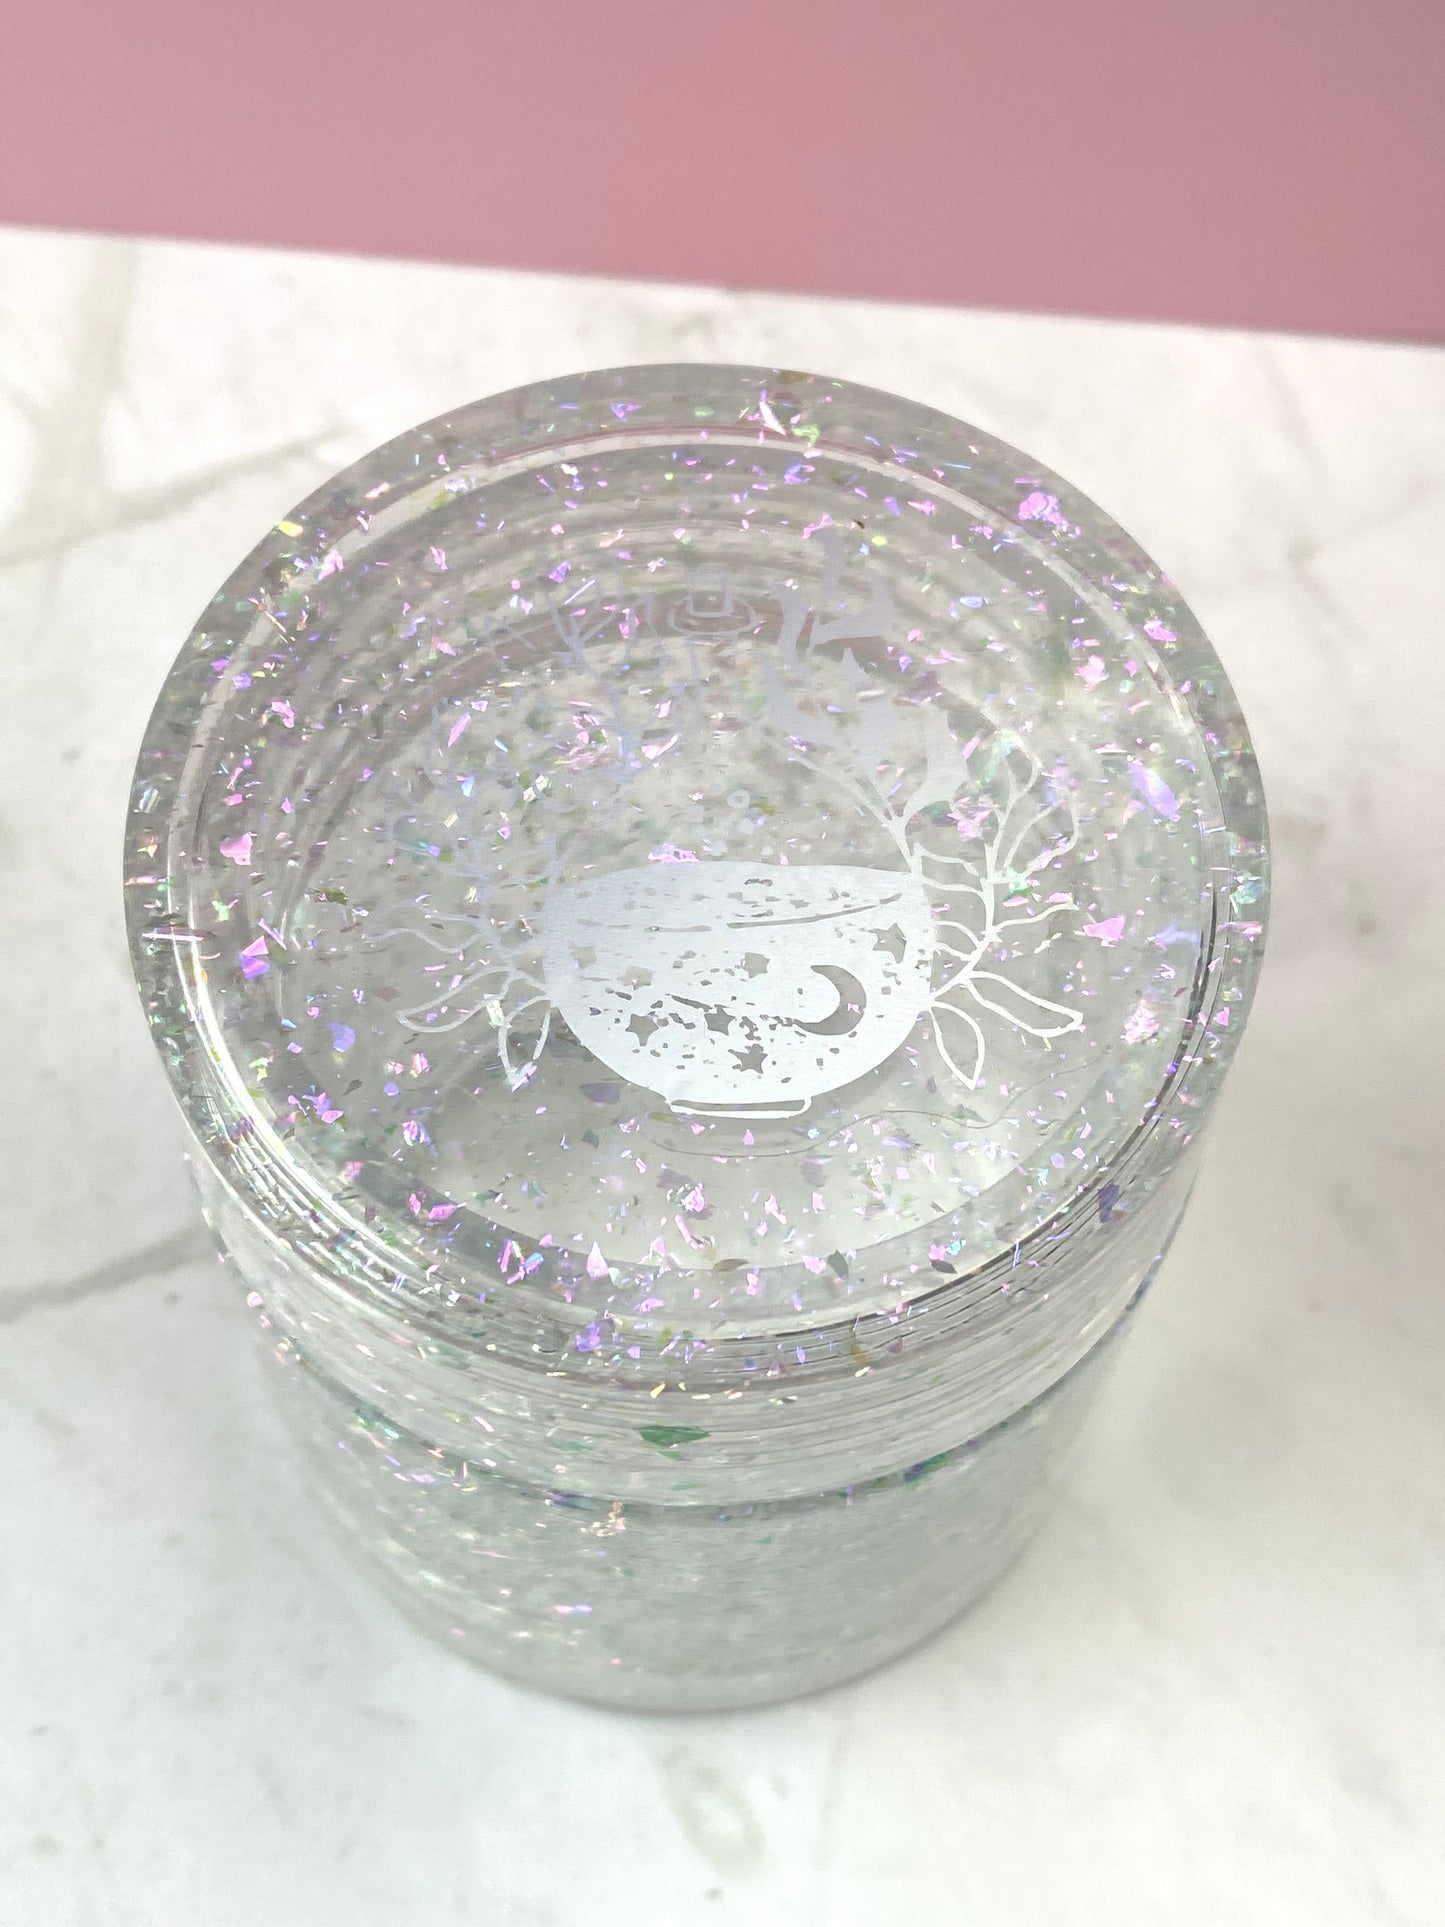 Iridescent Flake Large Round Jar with Potion Bottle Decal | Spell Jar | Stash Jar | Handmade Home Décor